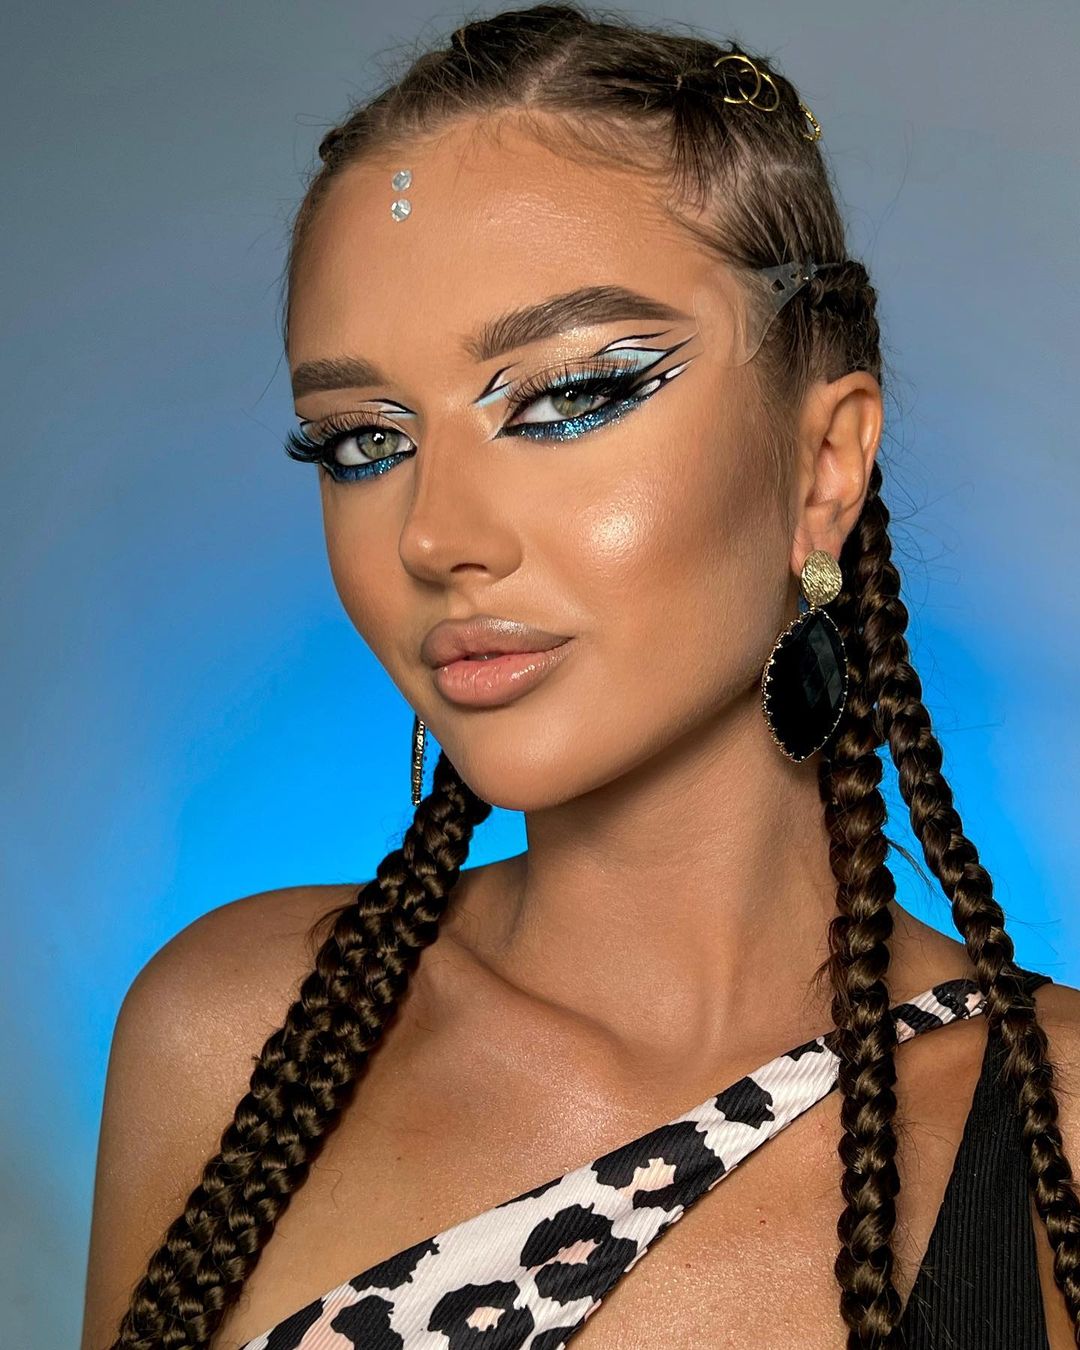 Lichtblauwe glitter make-up met witte oogschaduw ontwerp